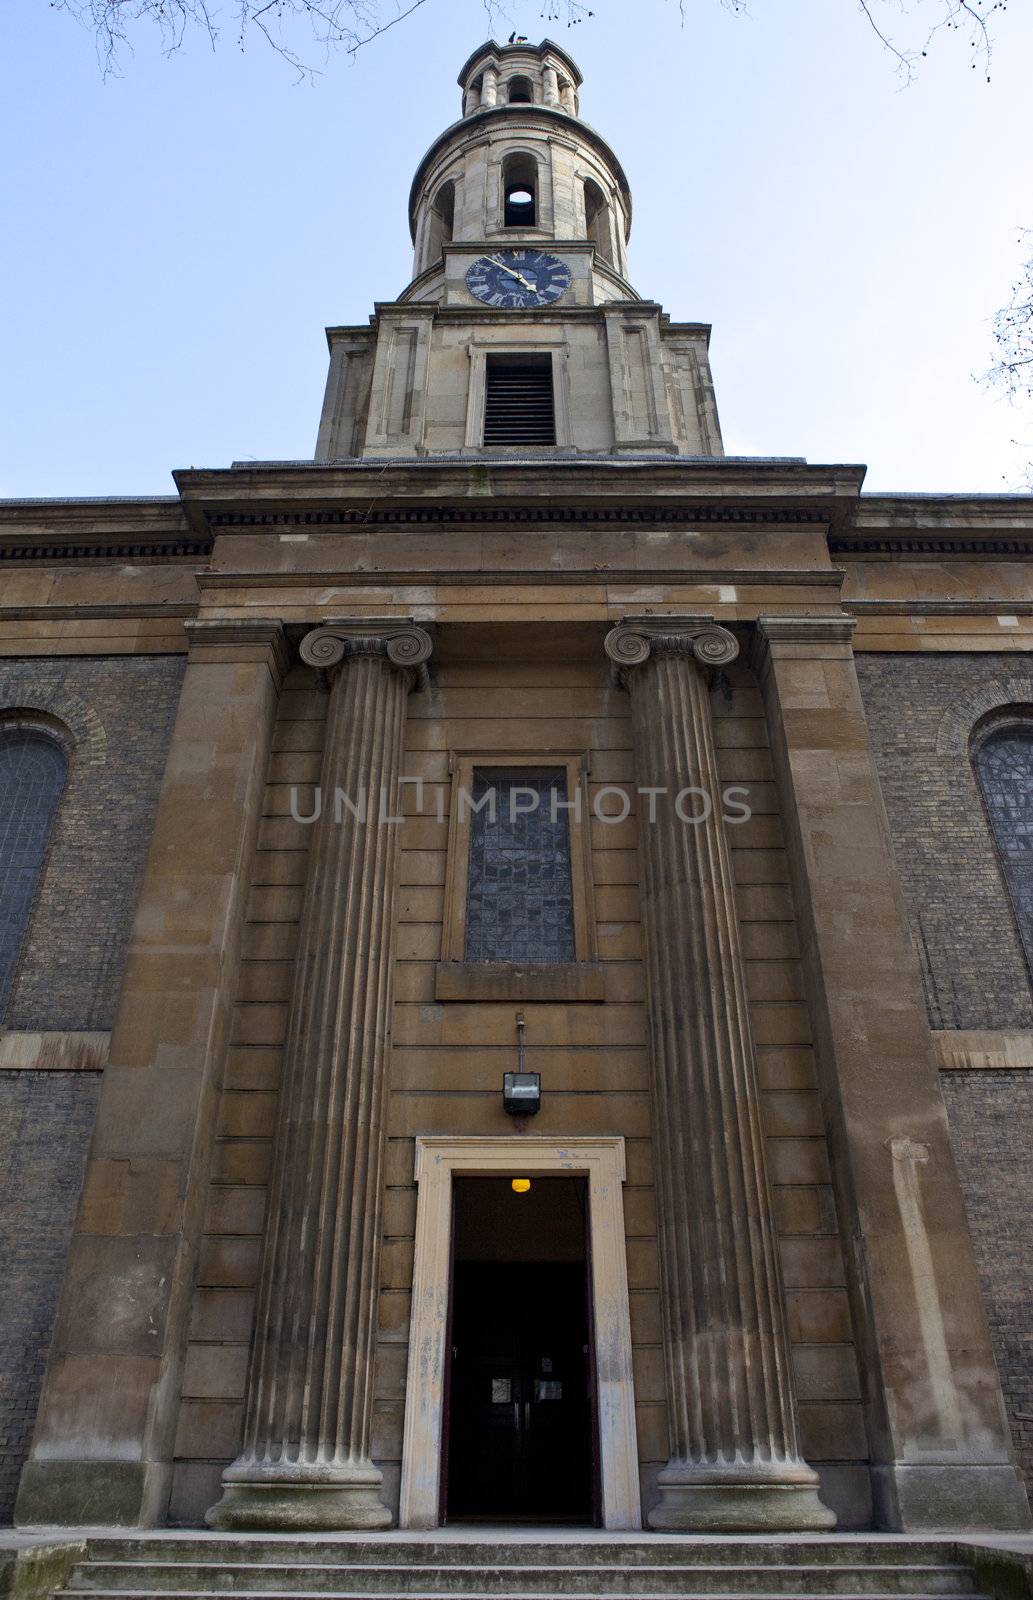 St. John the Baptist church in Hoxton, London.